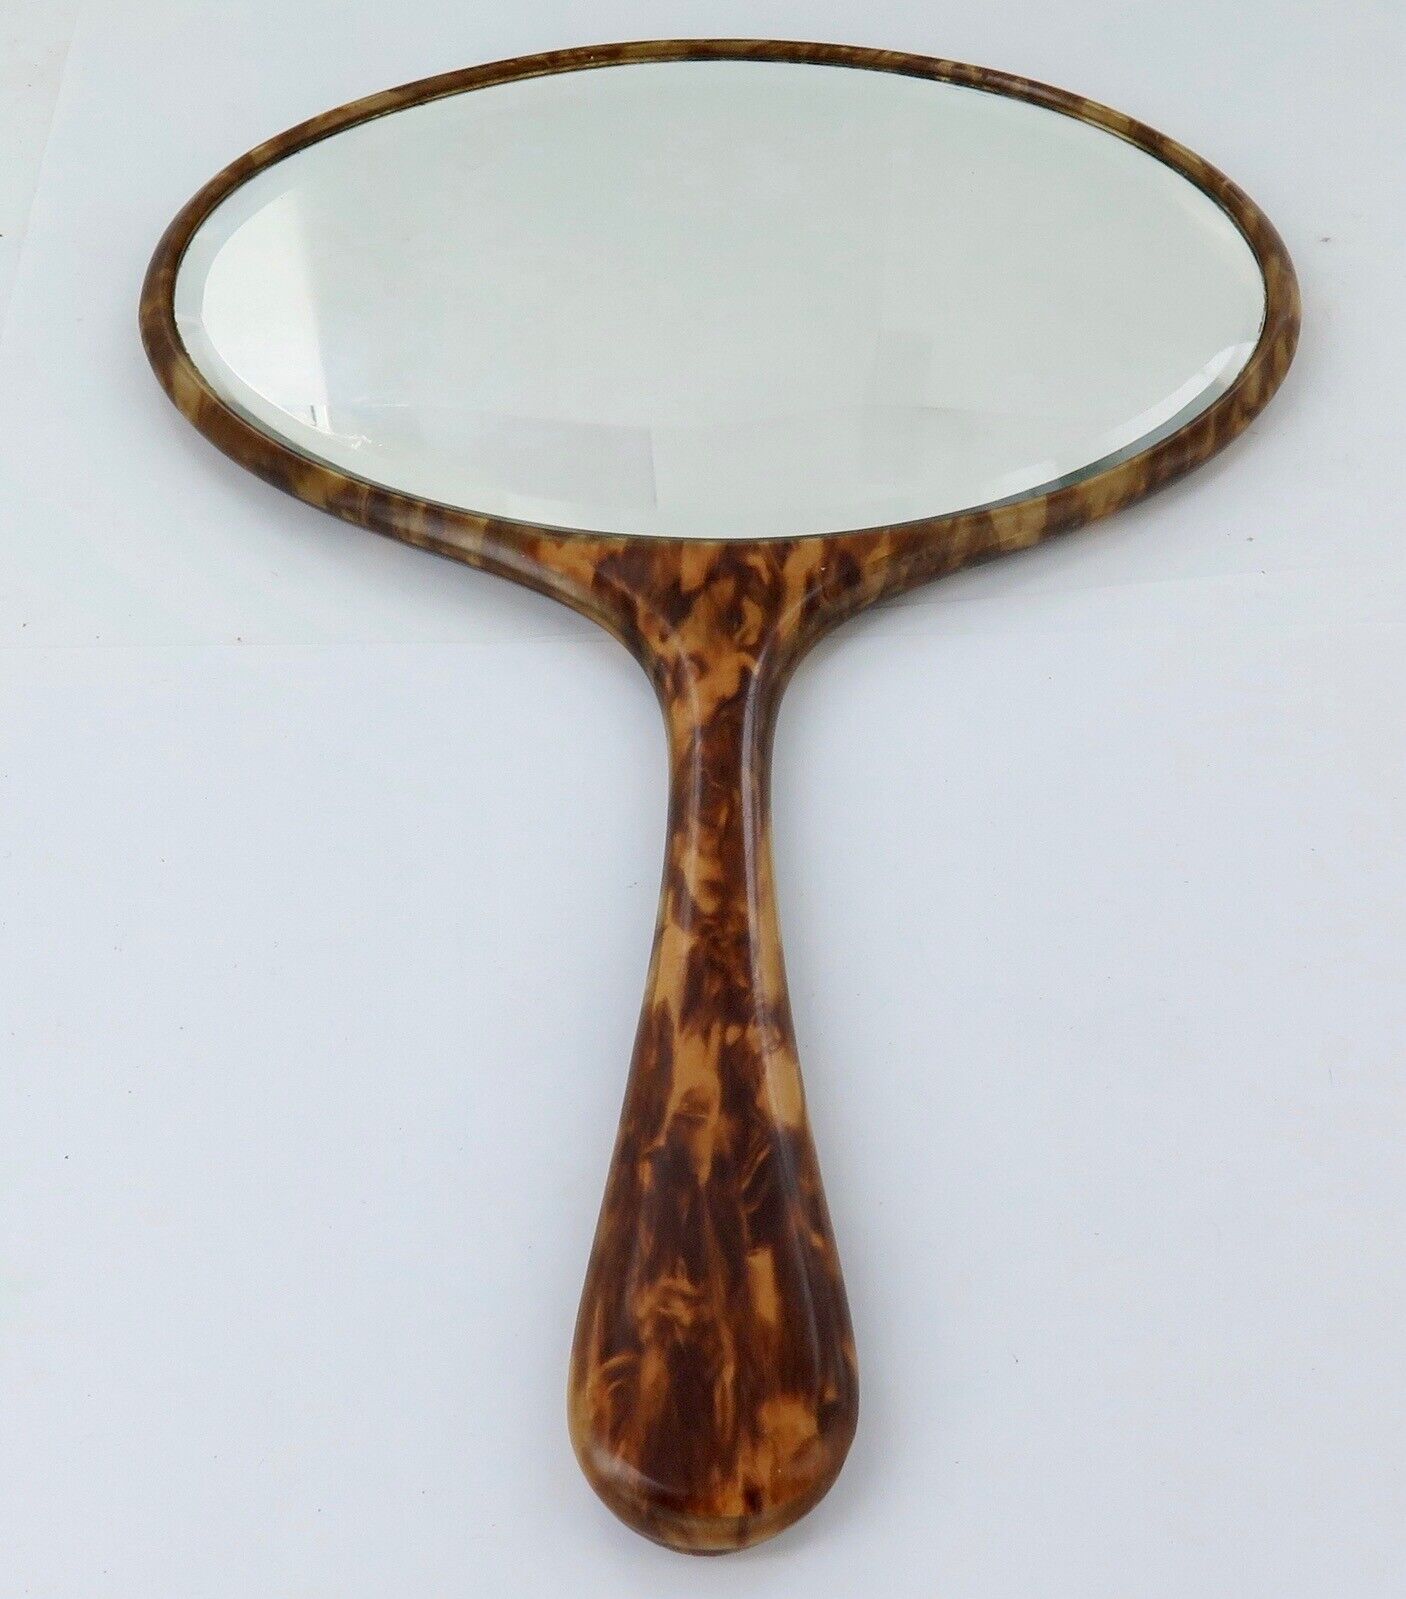 Very Large Vintage Faux Tortoiseshell Bevelled Edge Hand Mirror.